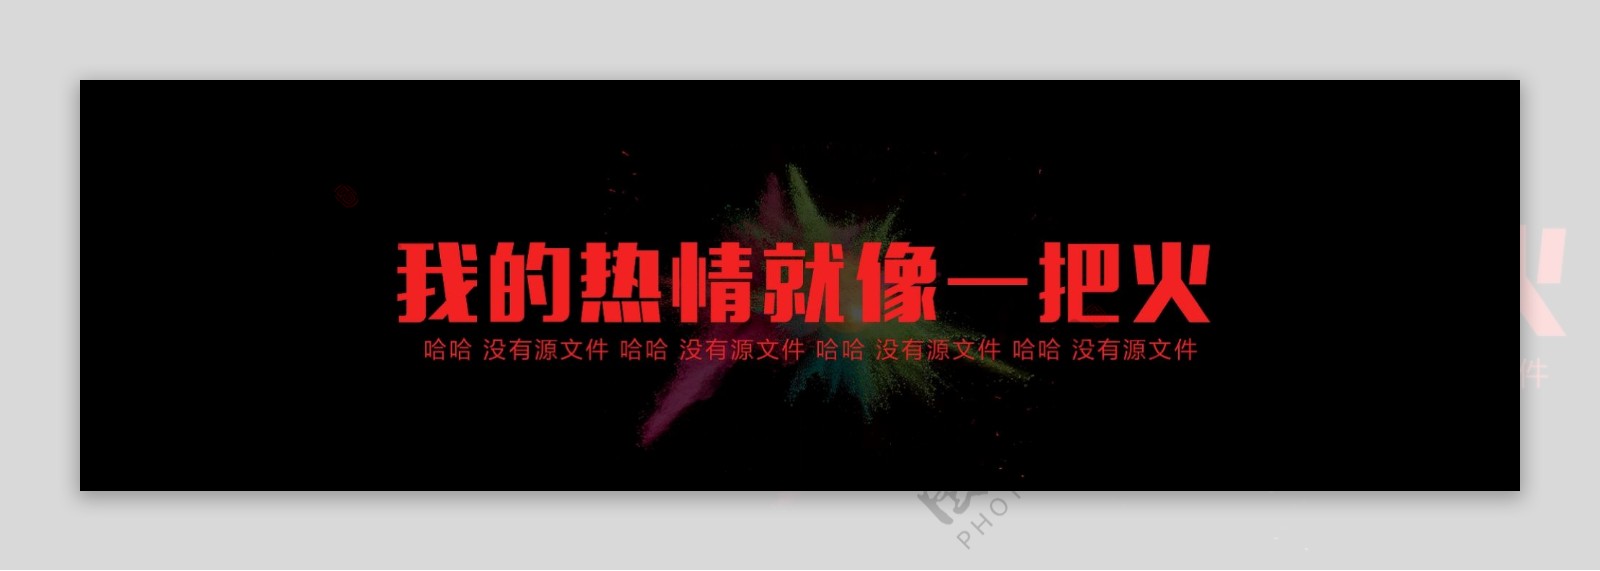 节日促销海报首页banner1920海报